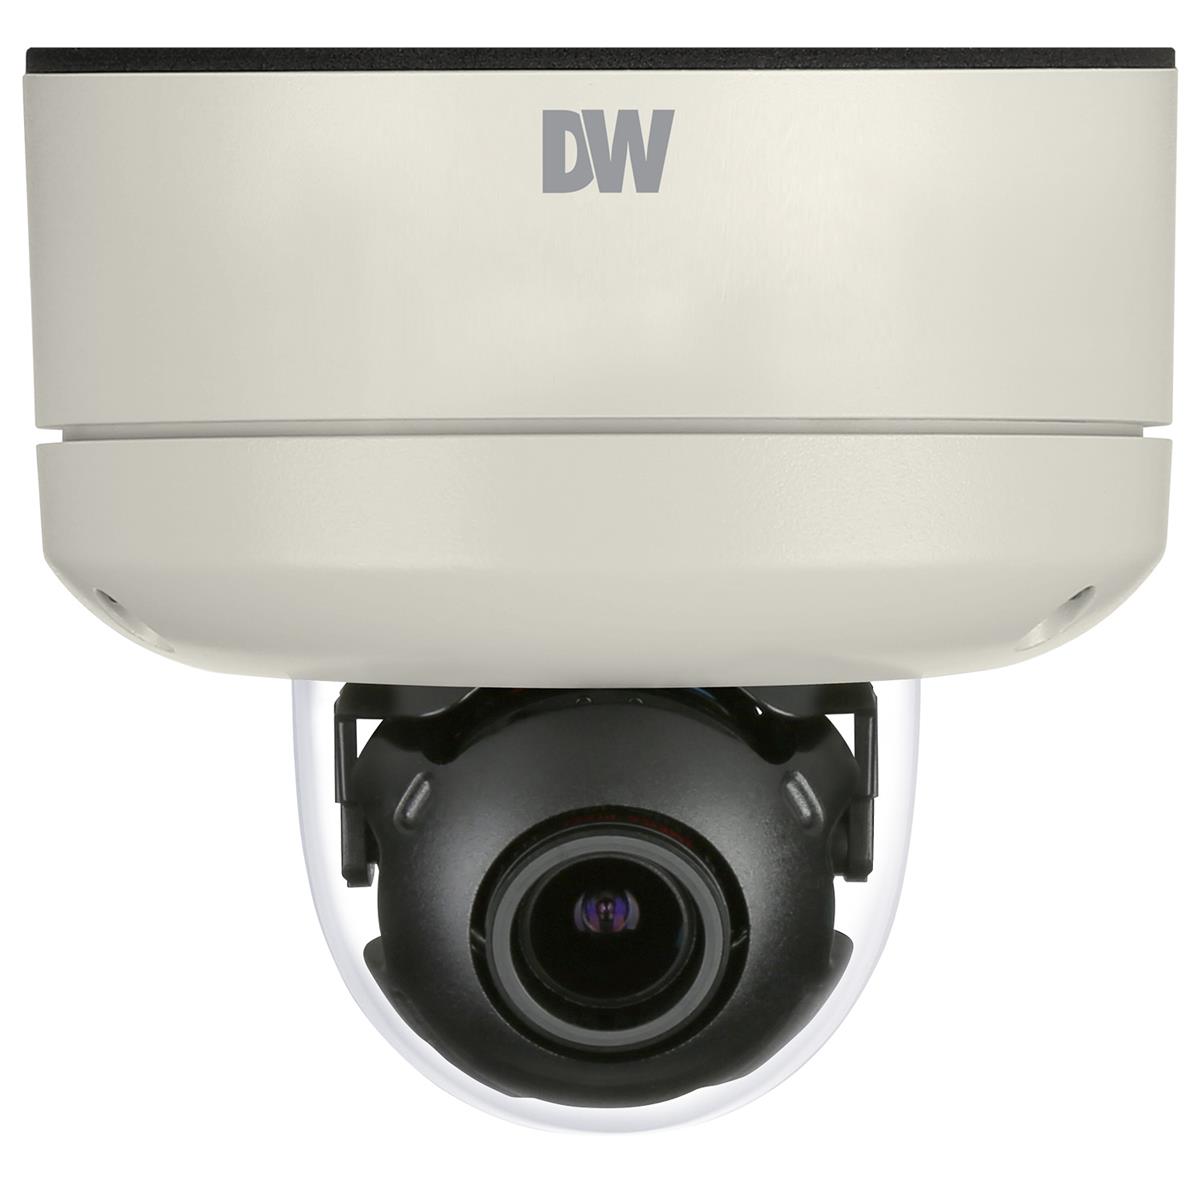 Image of Digital Watchdog DWC-V4283WD 2.1MP Analog Dome Camera